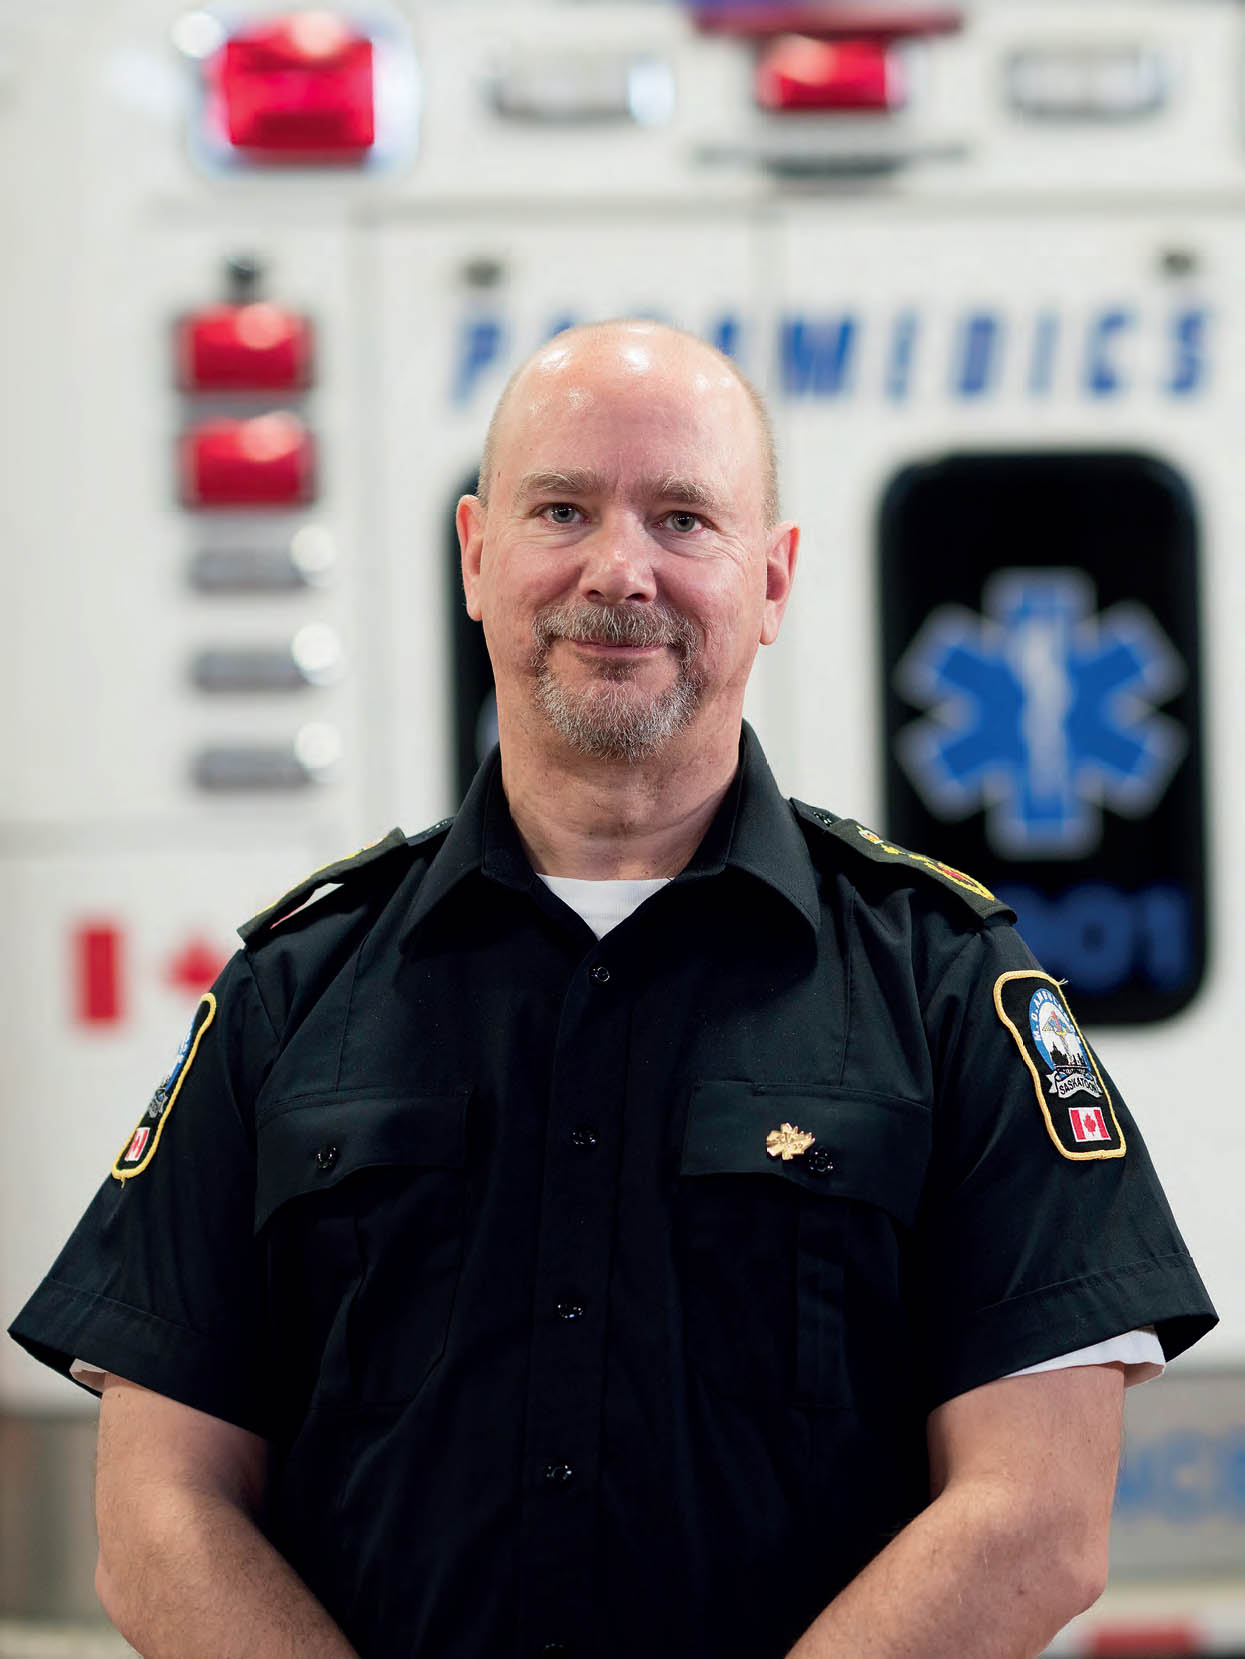 Tim Hillier, Deputy Chief, Professional Standards at Medavie Health Services West, Saskatoon, Canada.